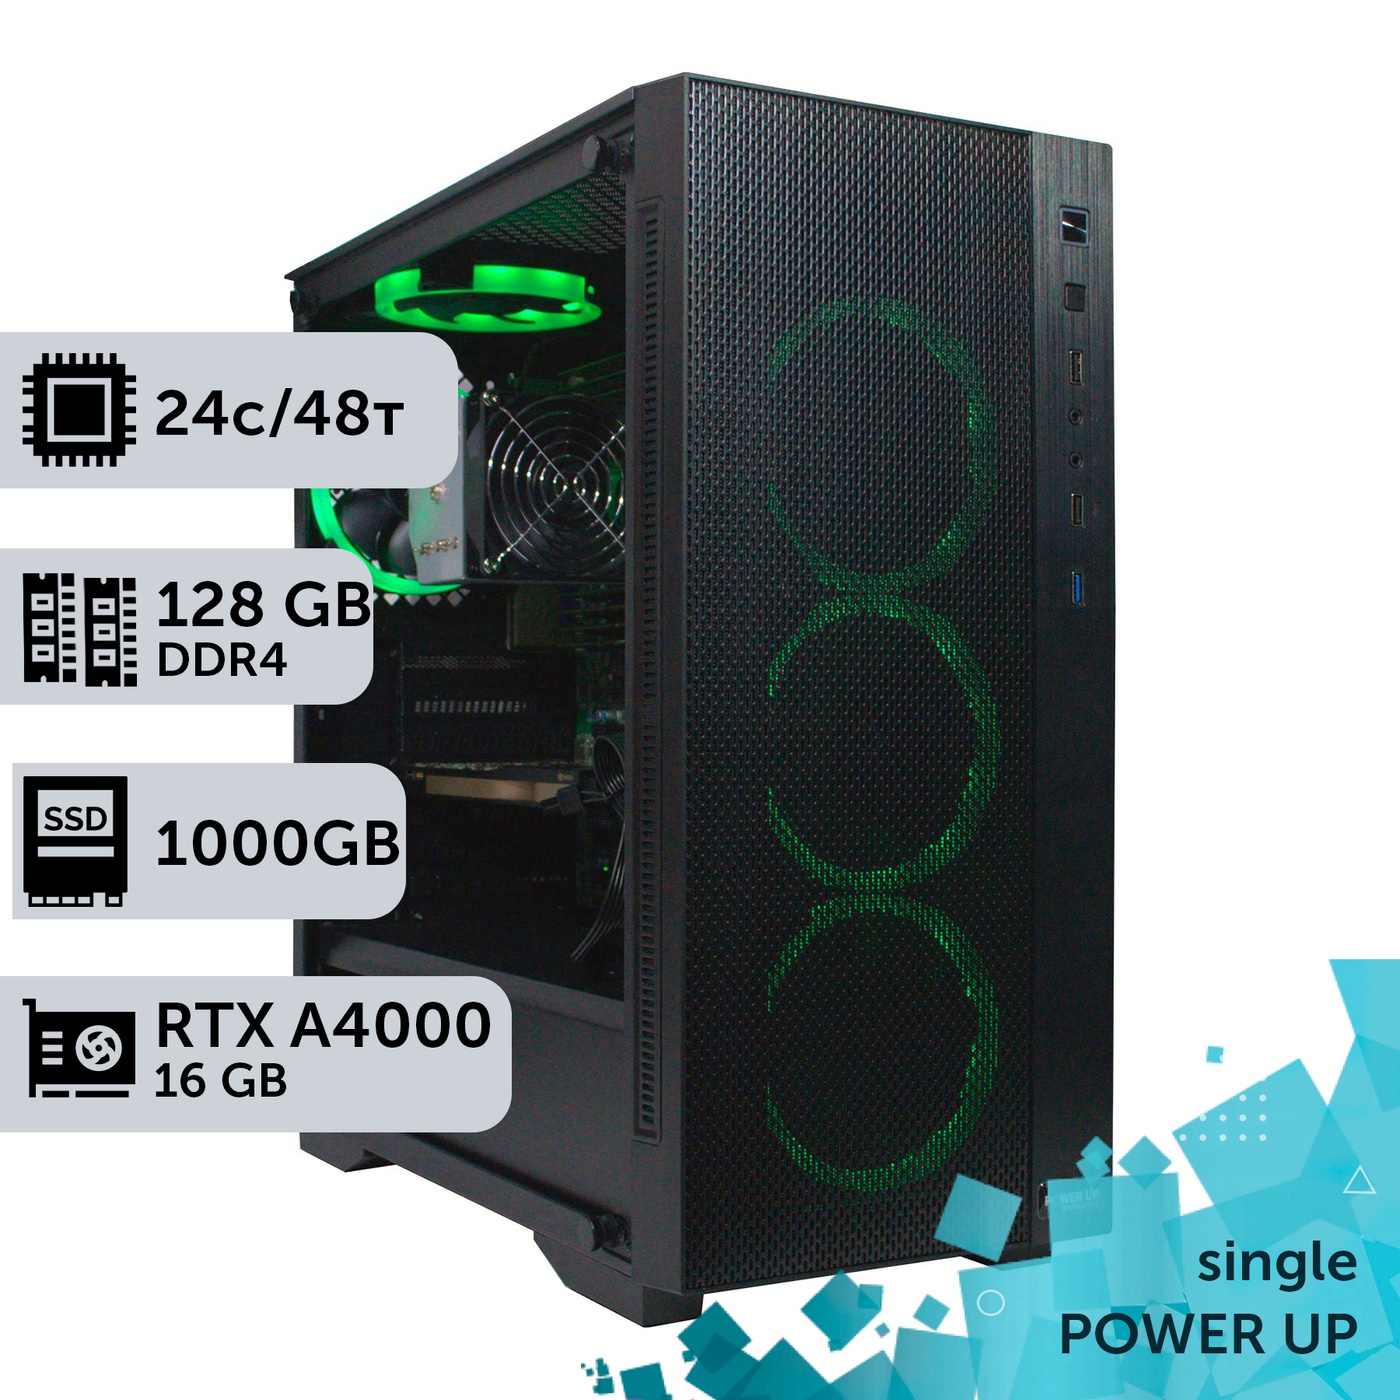 Робоча станція PowerUp #272 AMD EPYC 7413/128 GB/SSD 1TB/NVIDIA Quadro RTX A4000 16GB